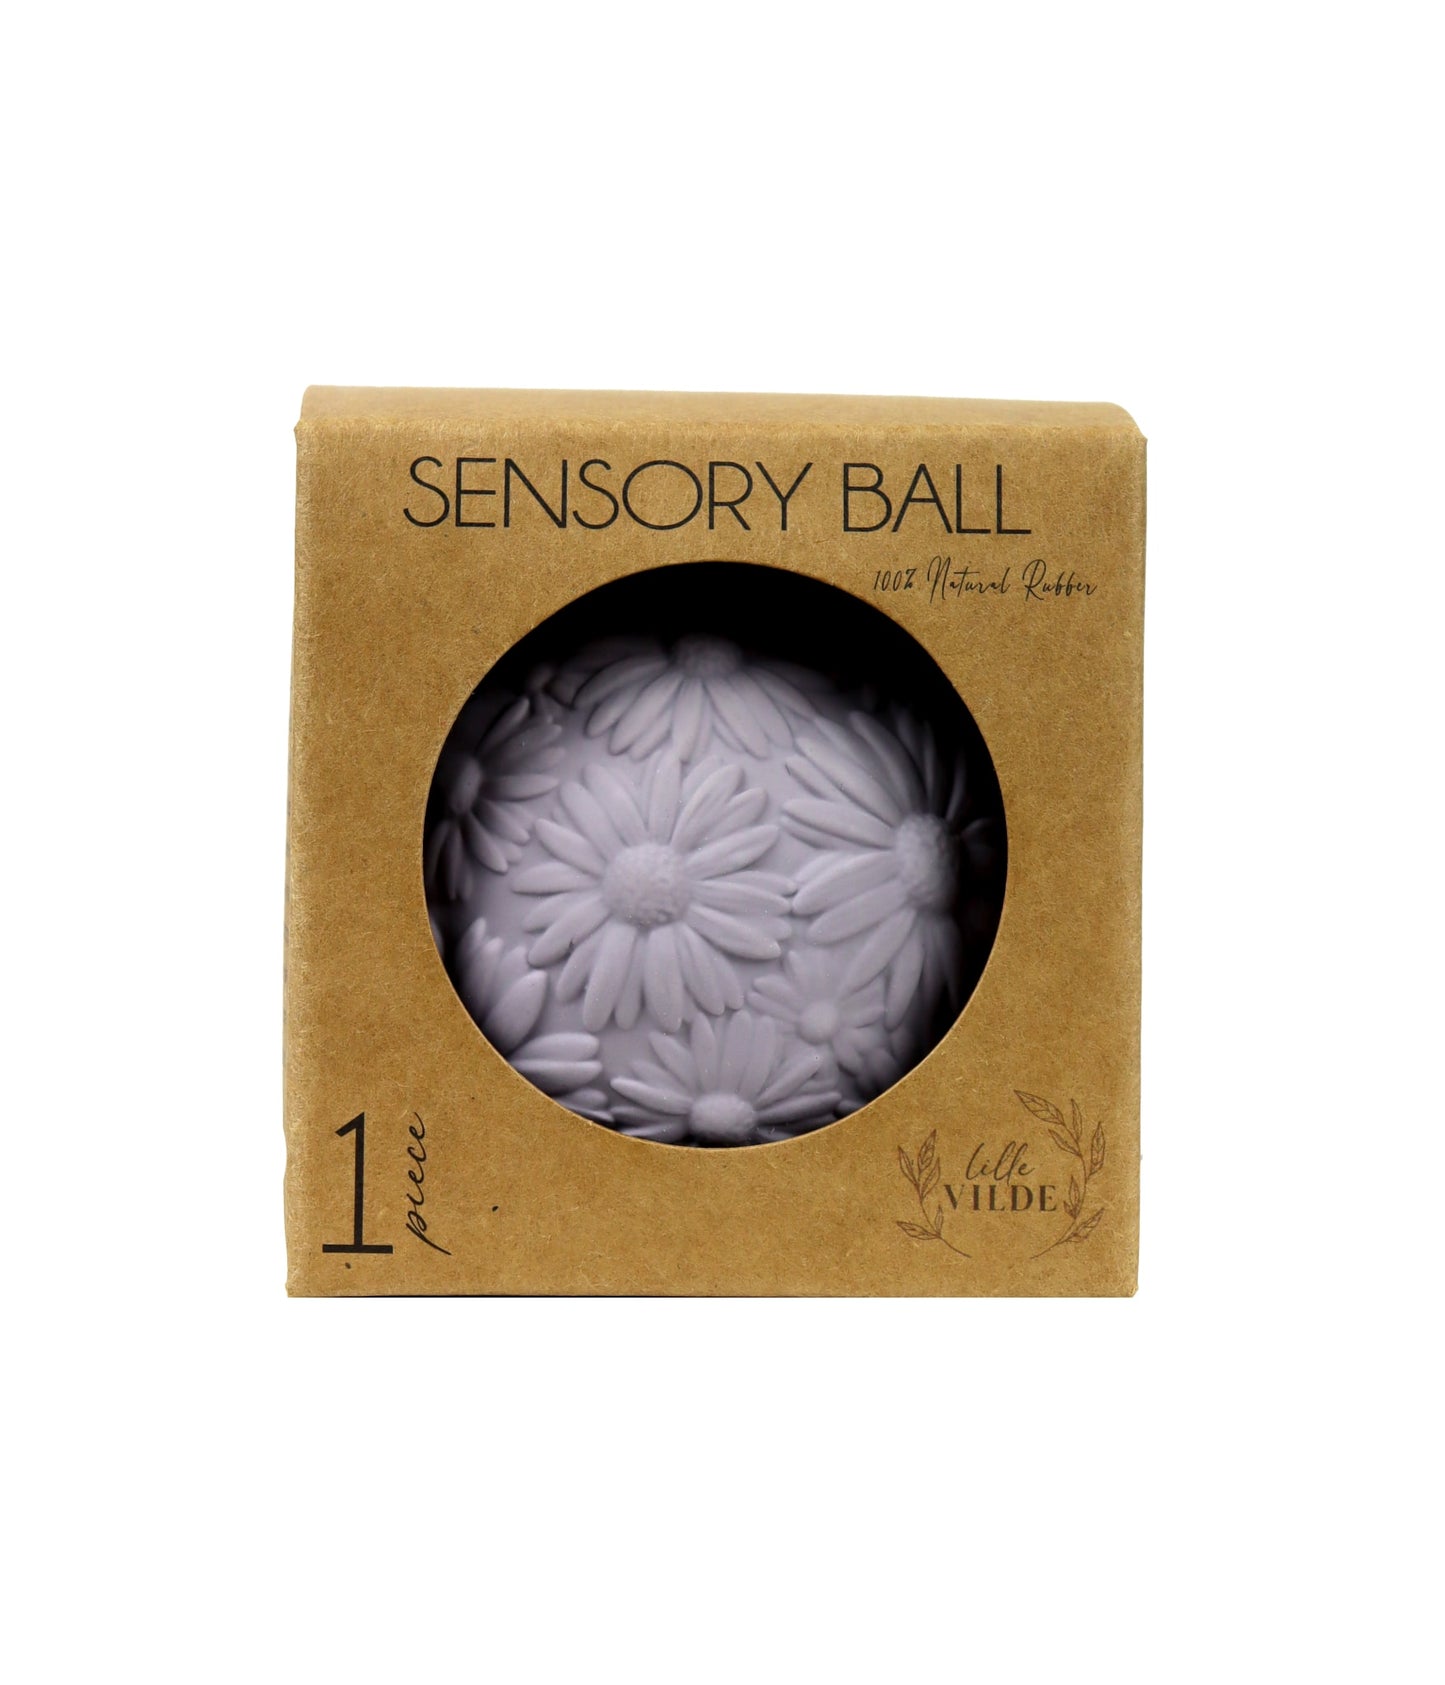 Sensory ball with bell - Flower